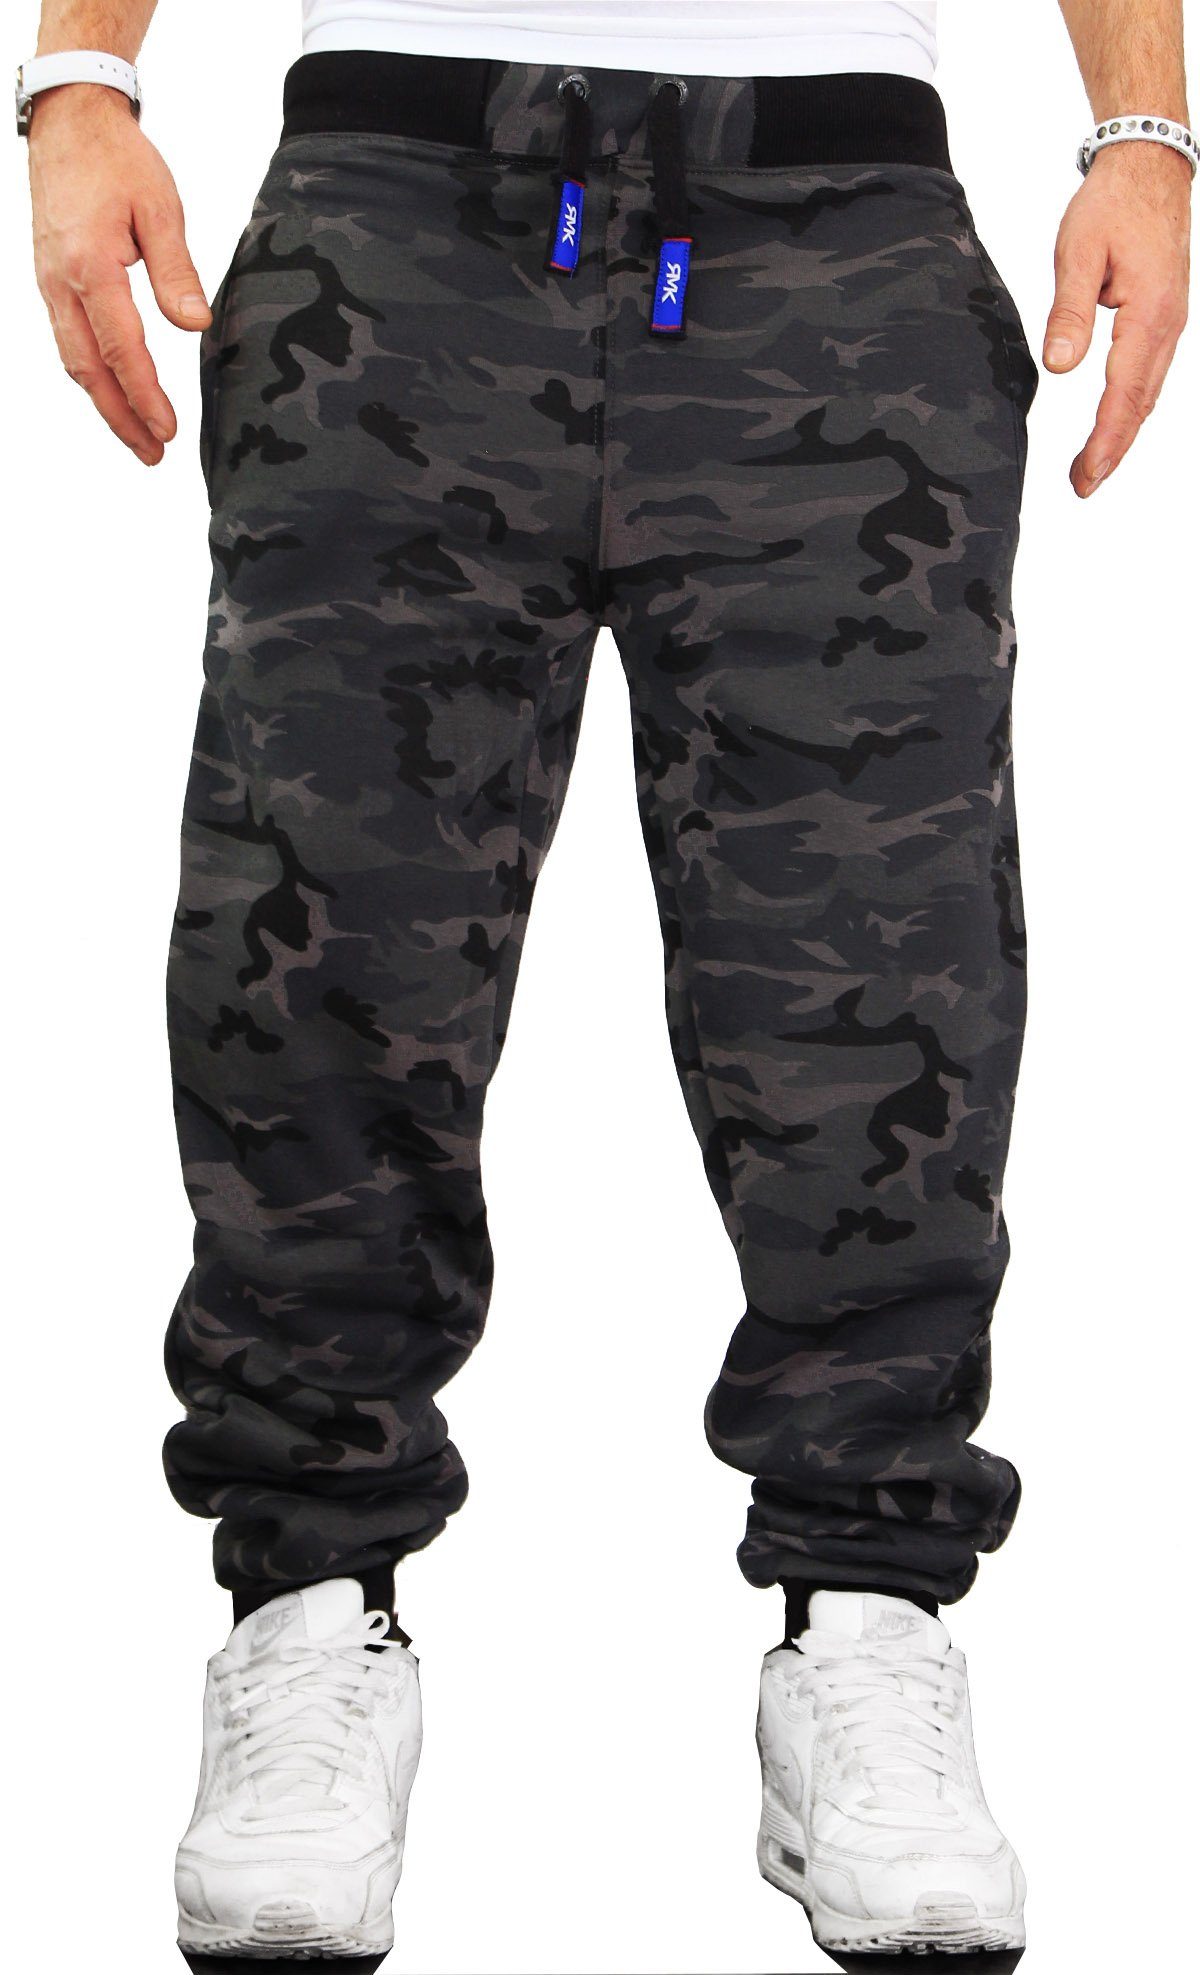 RMK Jogginghose »Herren Trainingshose Fitnesshose Sport Hose Sweatpants  Camouflage« online kaufen | OTTO